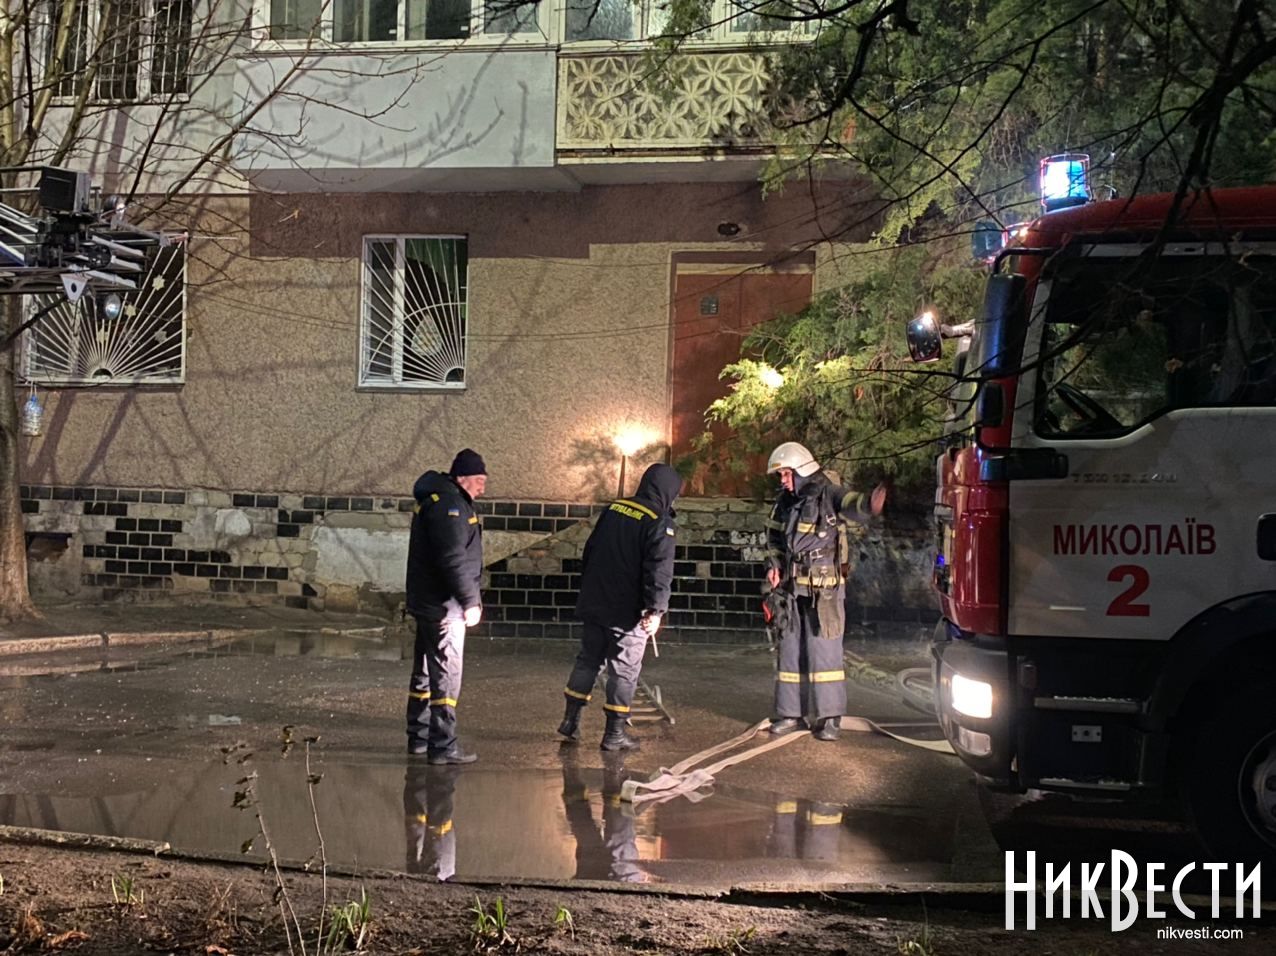 Пожар в Николаеве. Скриншот https://nikvesti.com/news/politics/207888